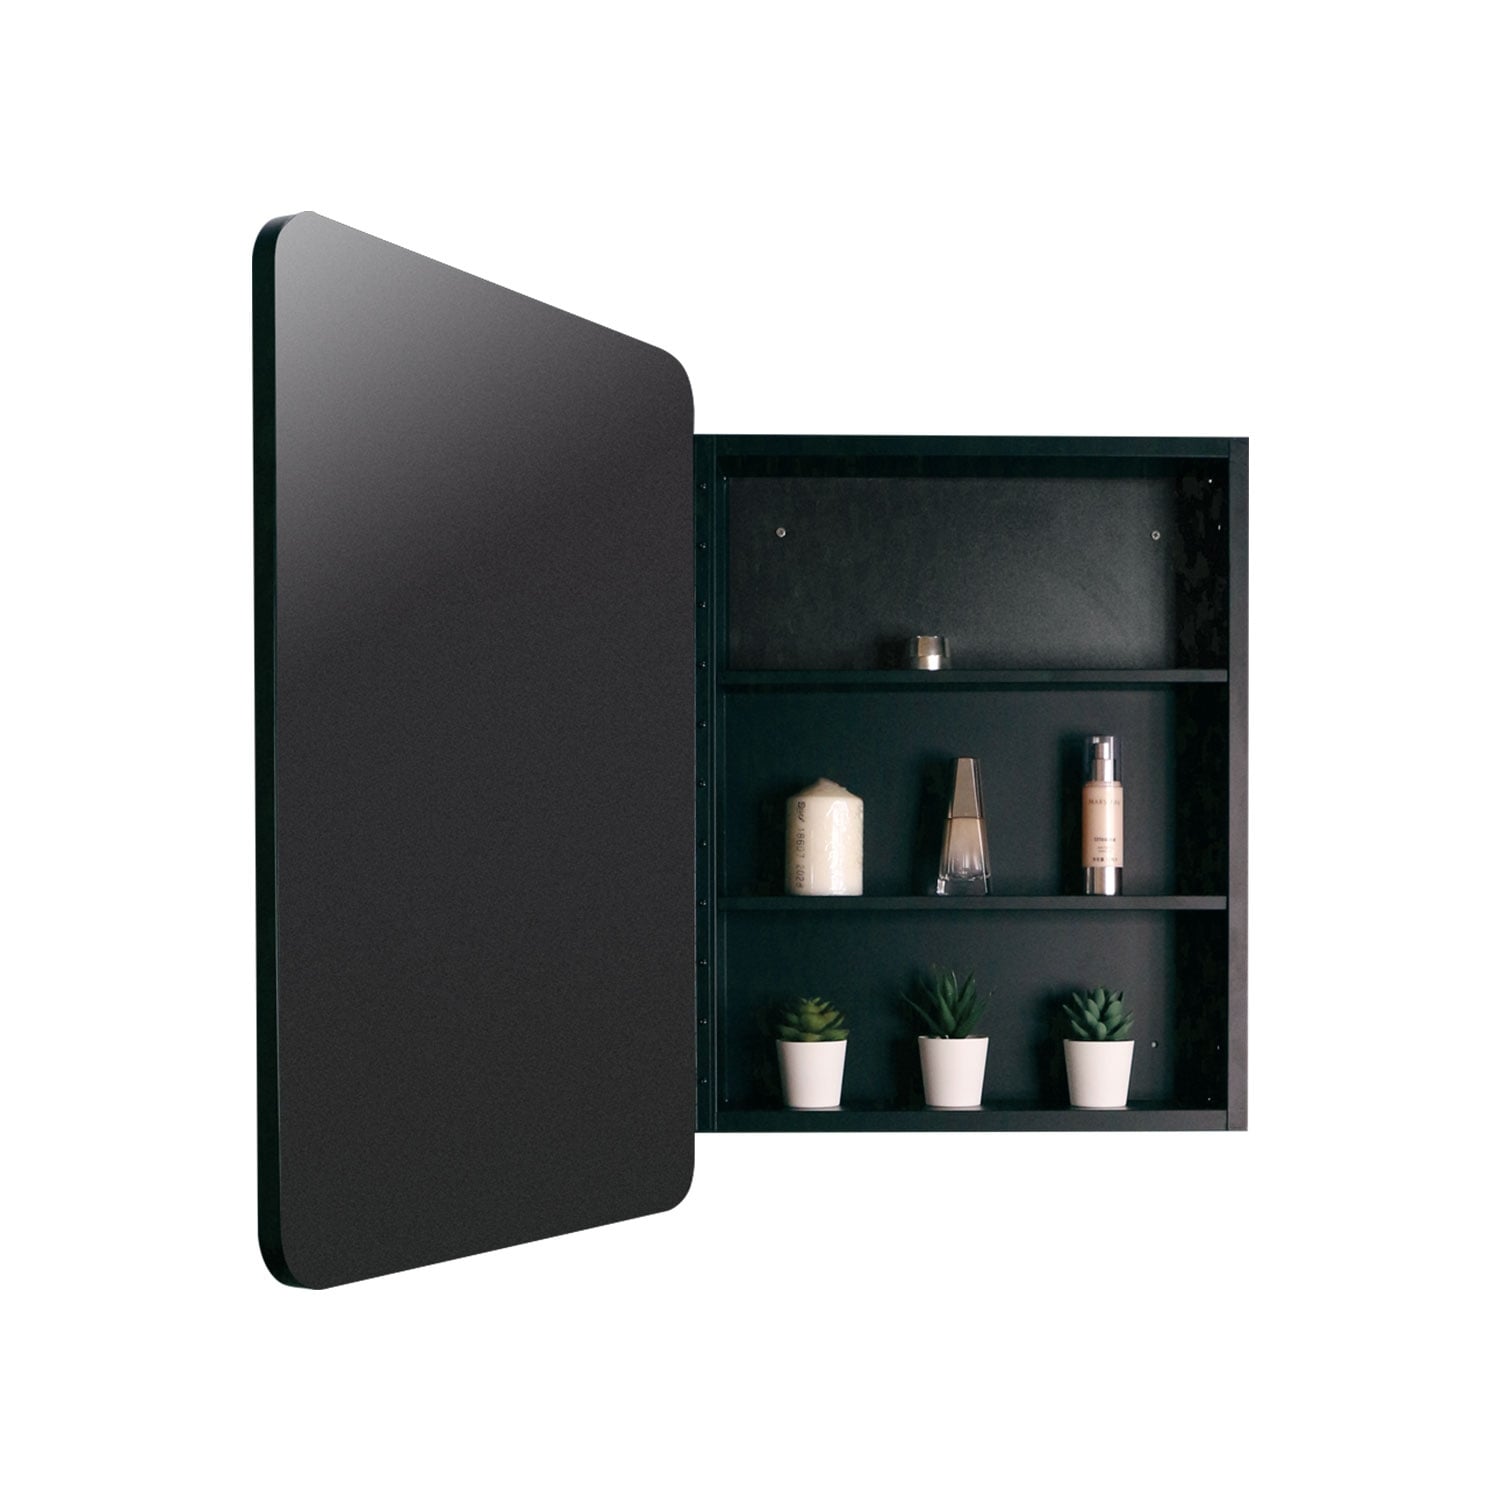 Black Metal Framed Wall mount or Recessed Bathroom Medicine Cabinet with Mirror